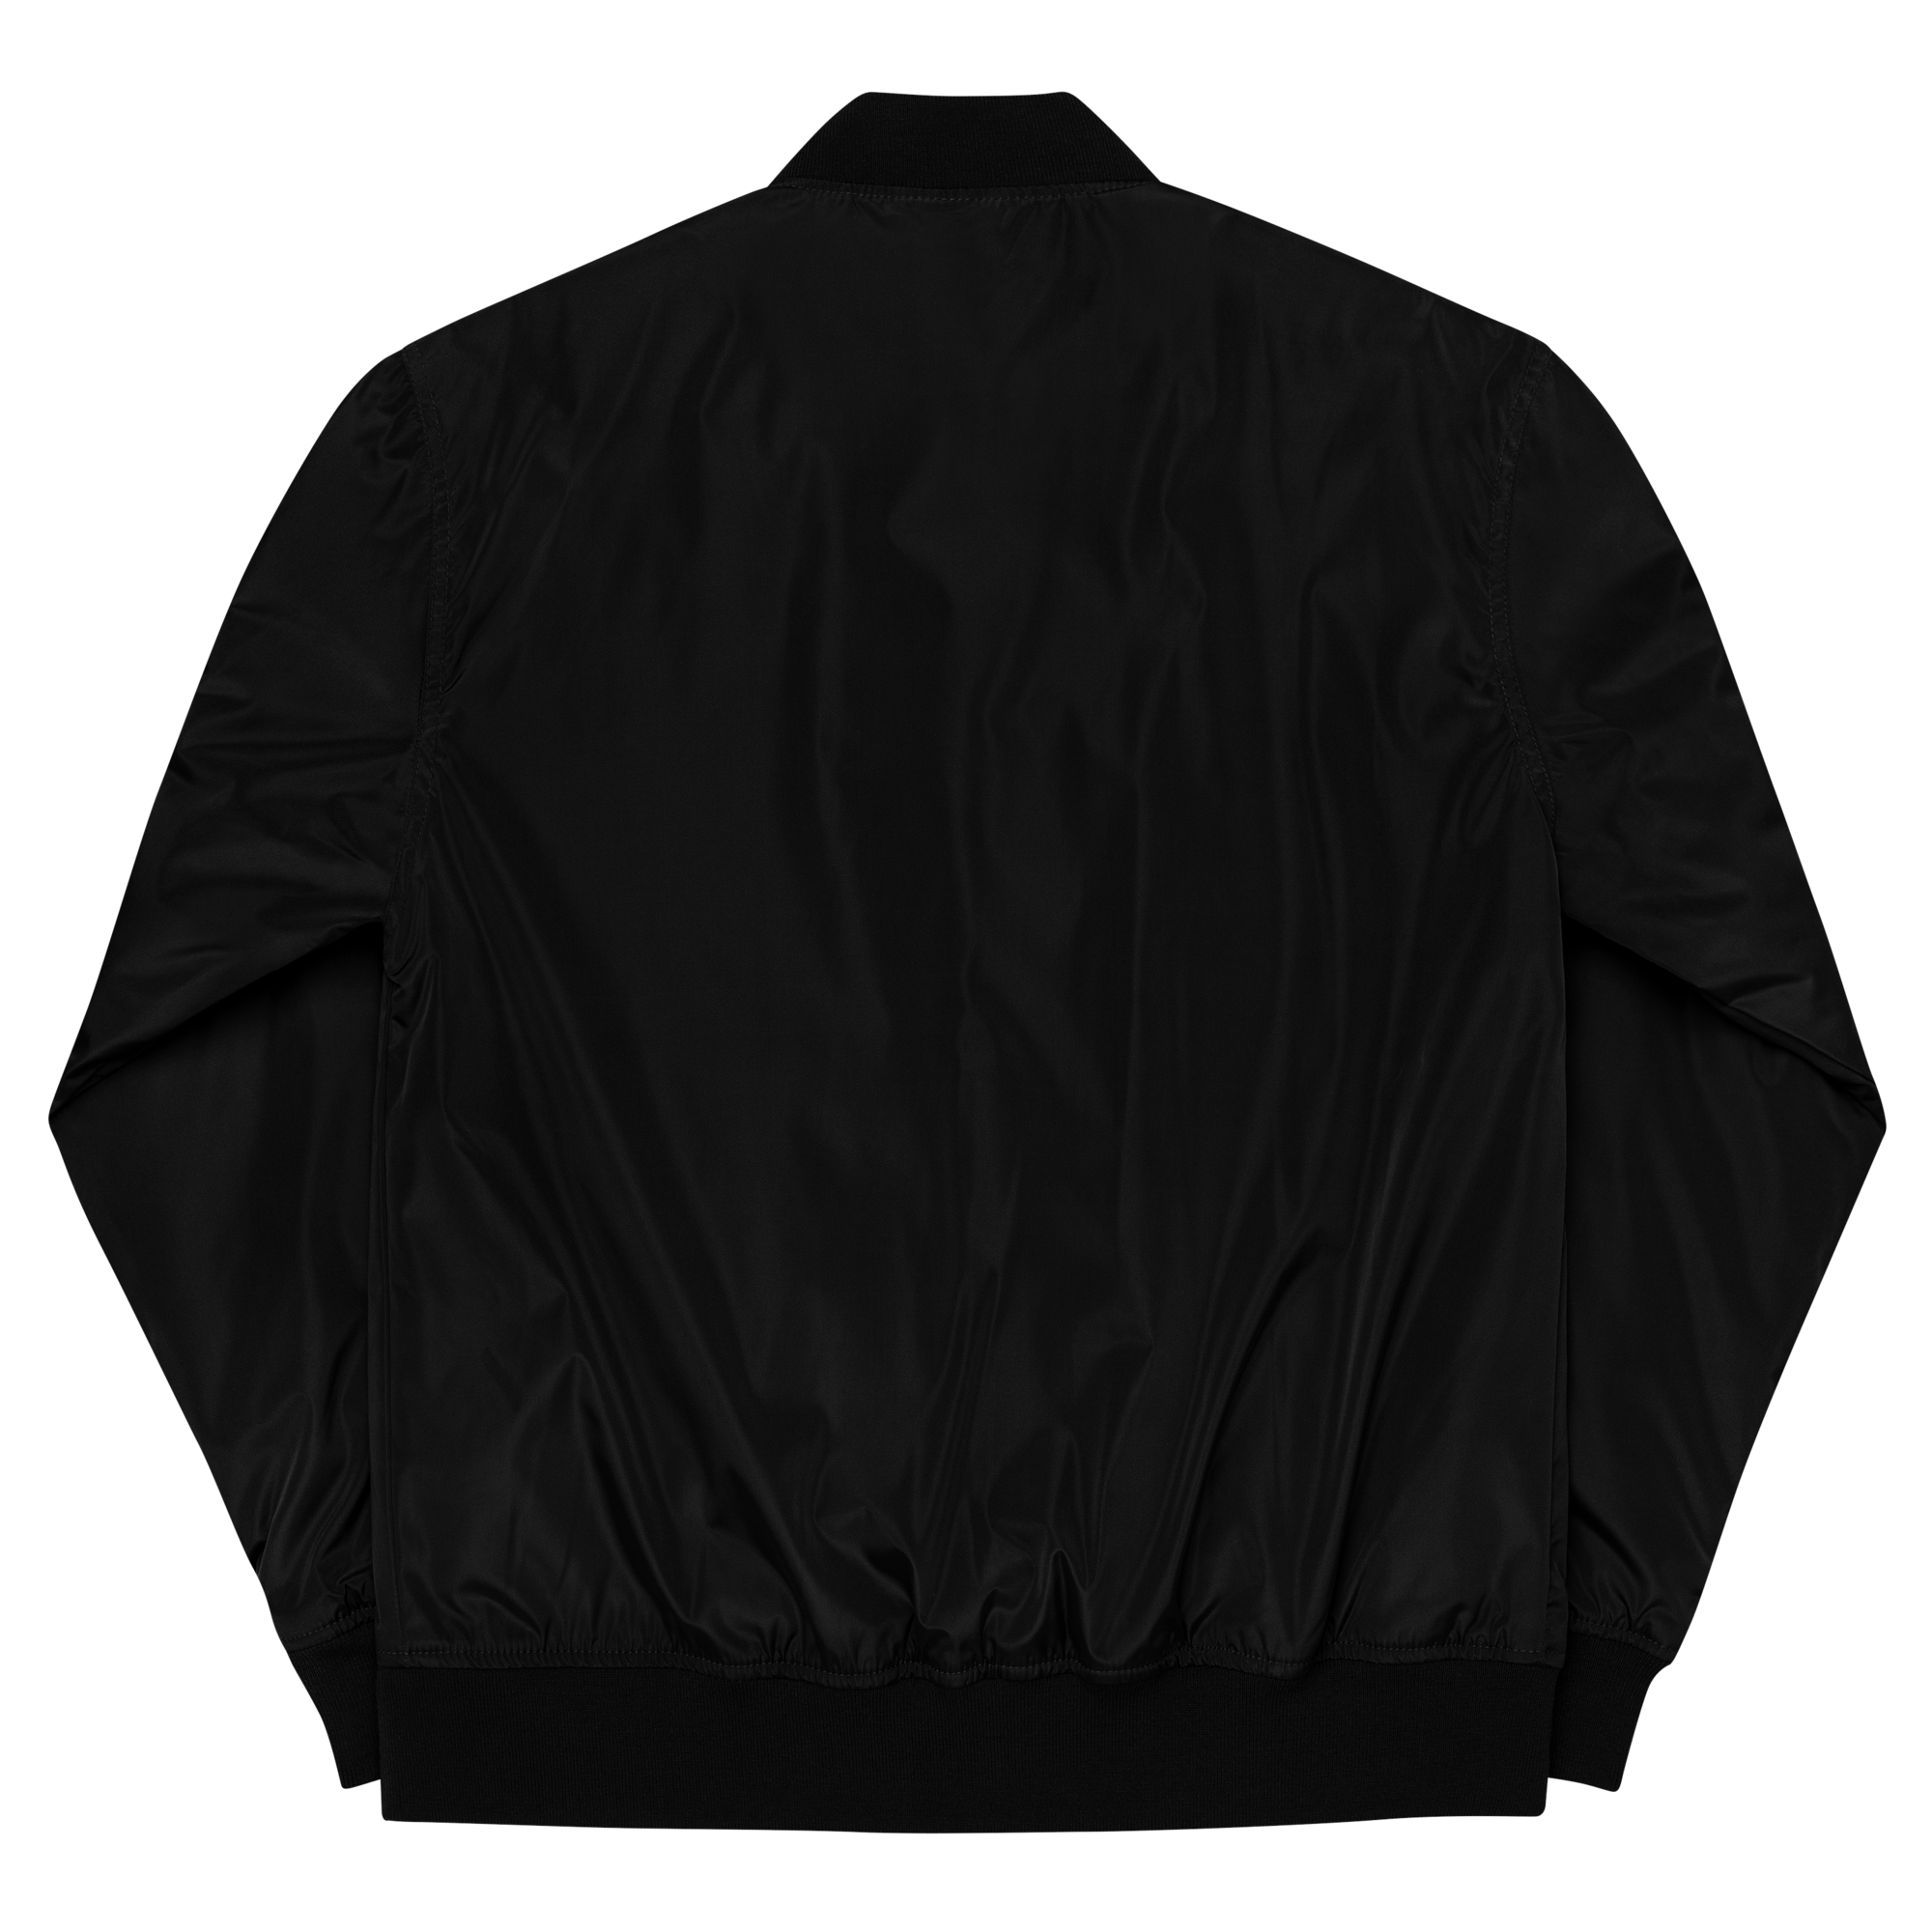 Sociedad Secreta Premium bomber jacket